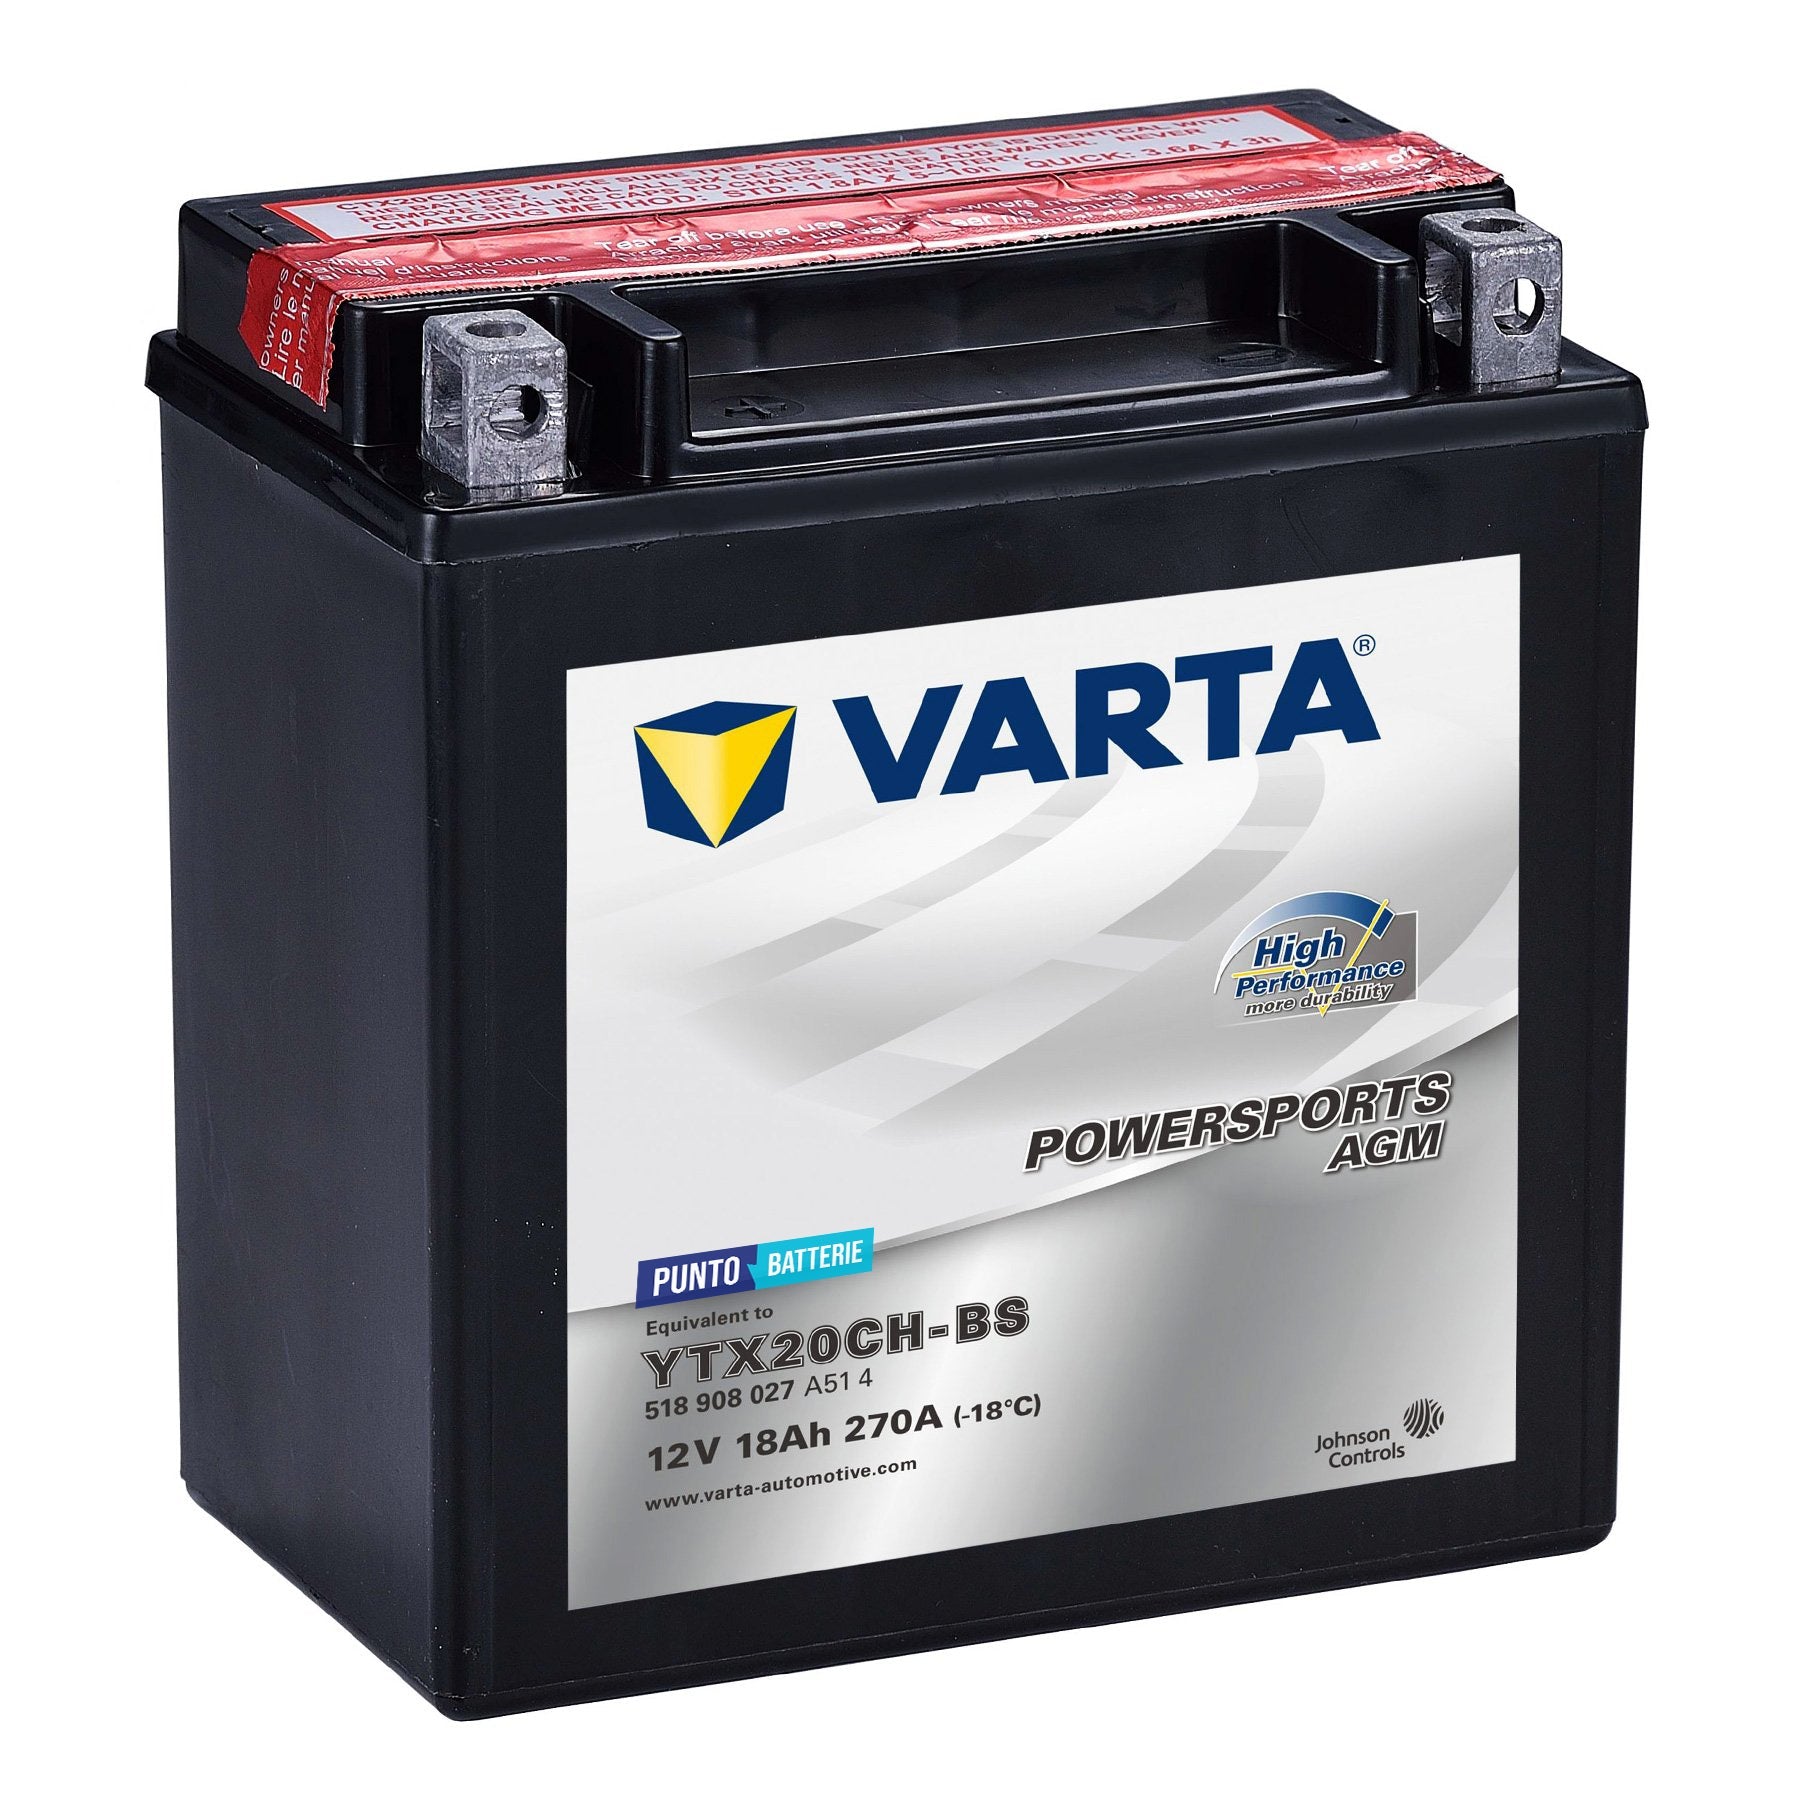 Batteria originale Varta Powersport AGM High Performance YTX20CH-BS, dimensioni 150 x 87 x 130, polo positivo a sinistra, 12 volt, 18 amperora, 270 ampere. Batteria per moto, scooter e powersport.